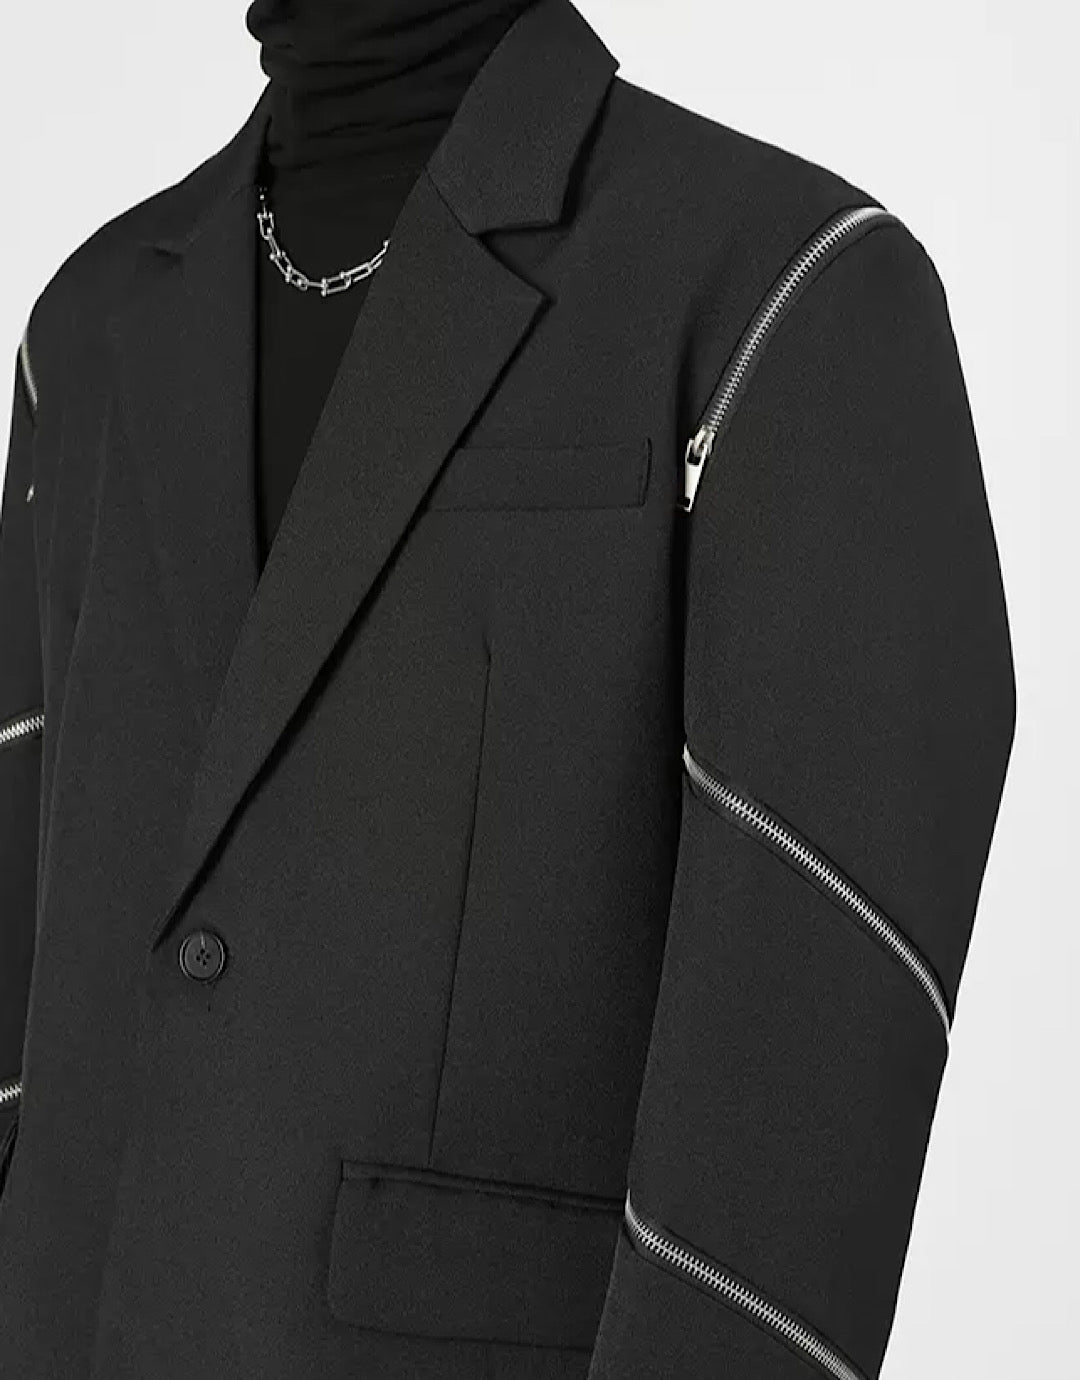 【BOB】Overall Zipper Modewide Jacket  BO0001